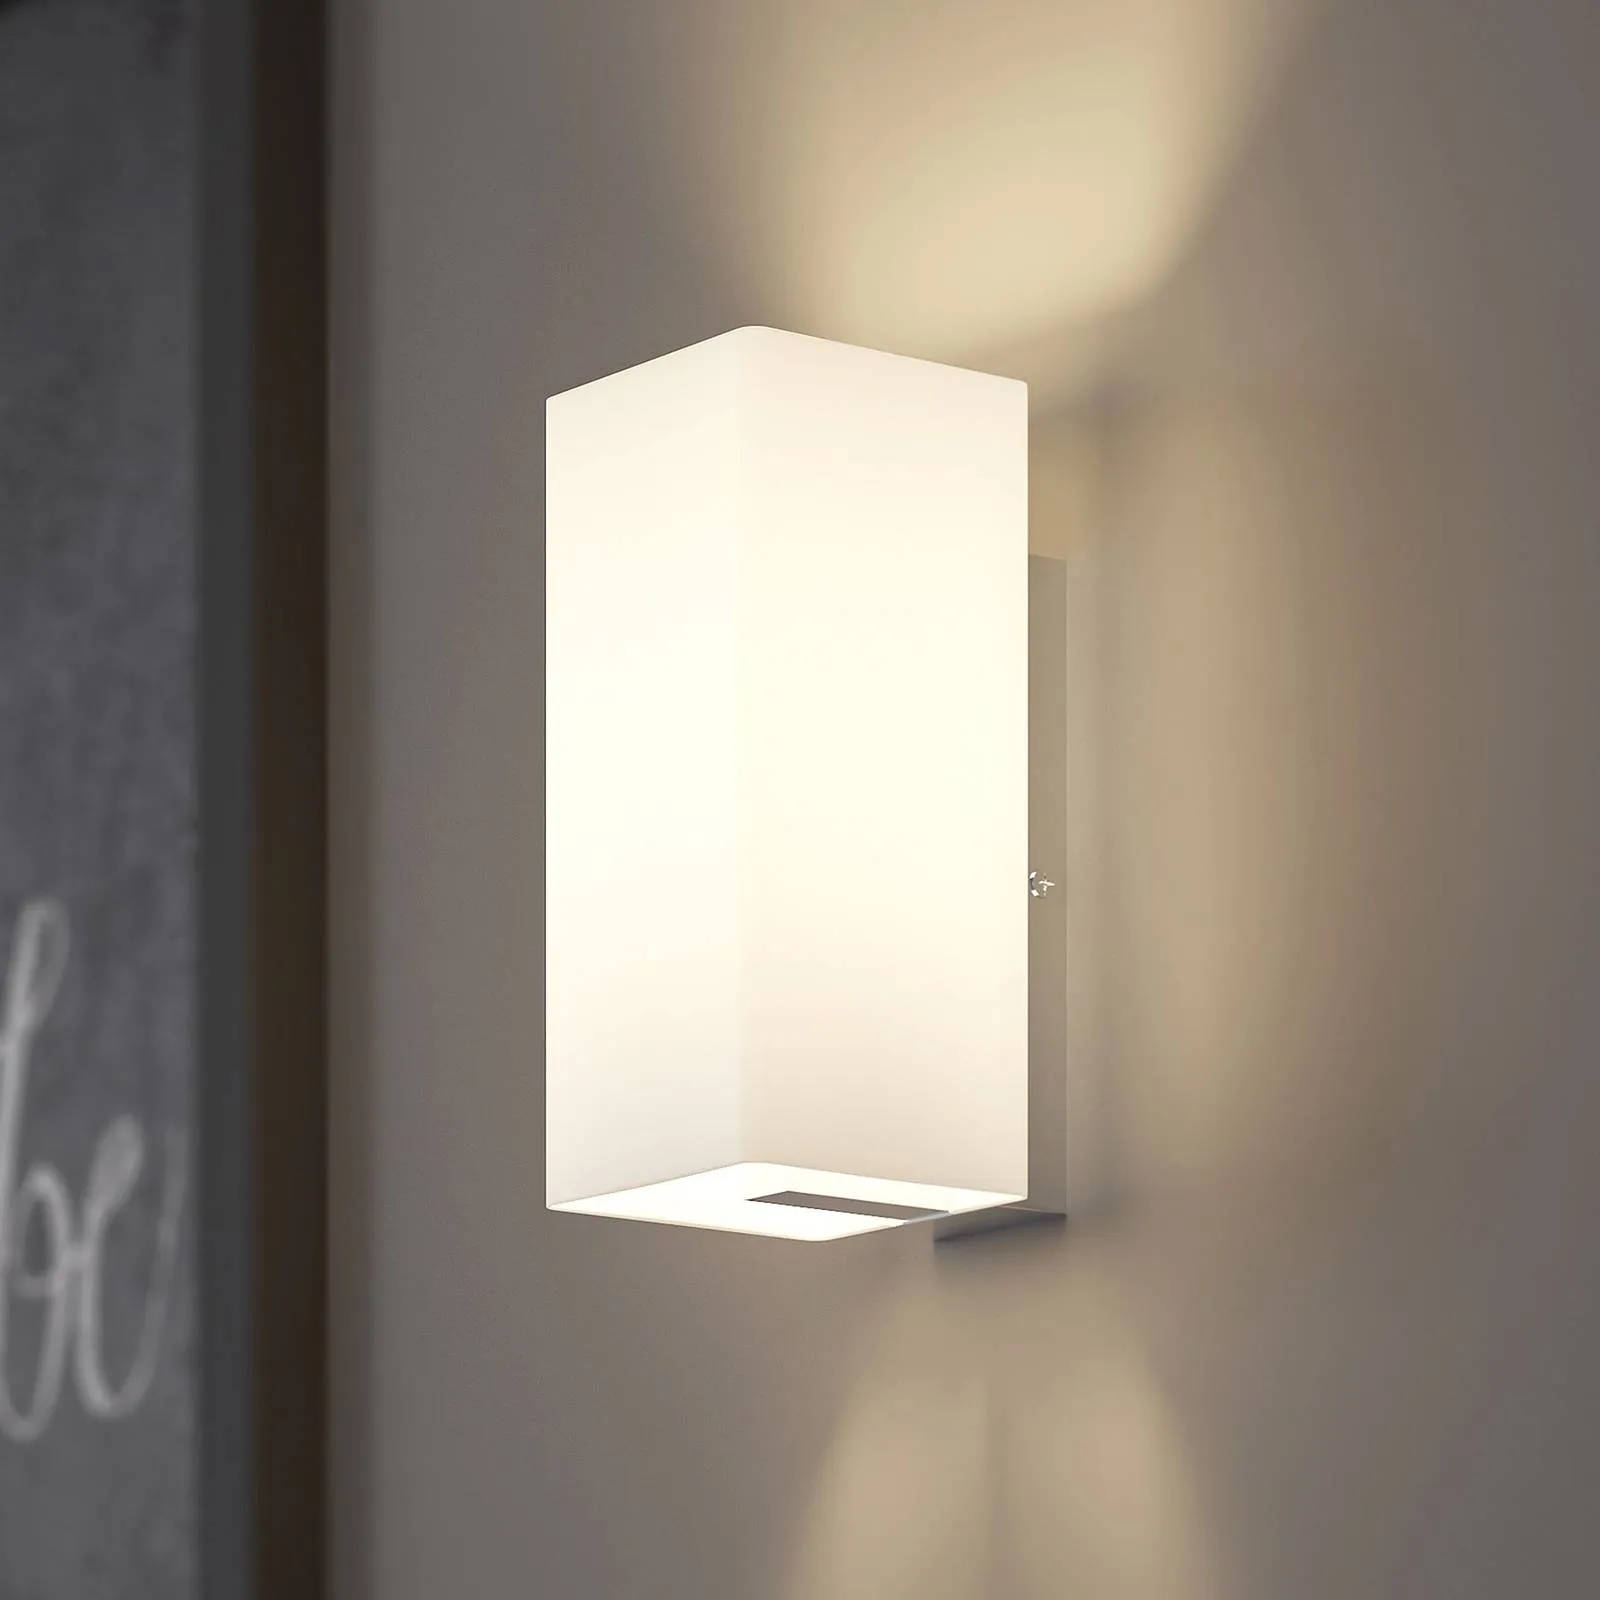 Lucande Asra wall light, angular glass lampshade